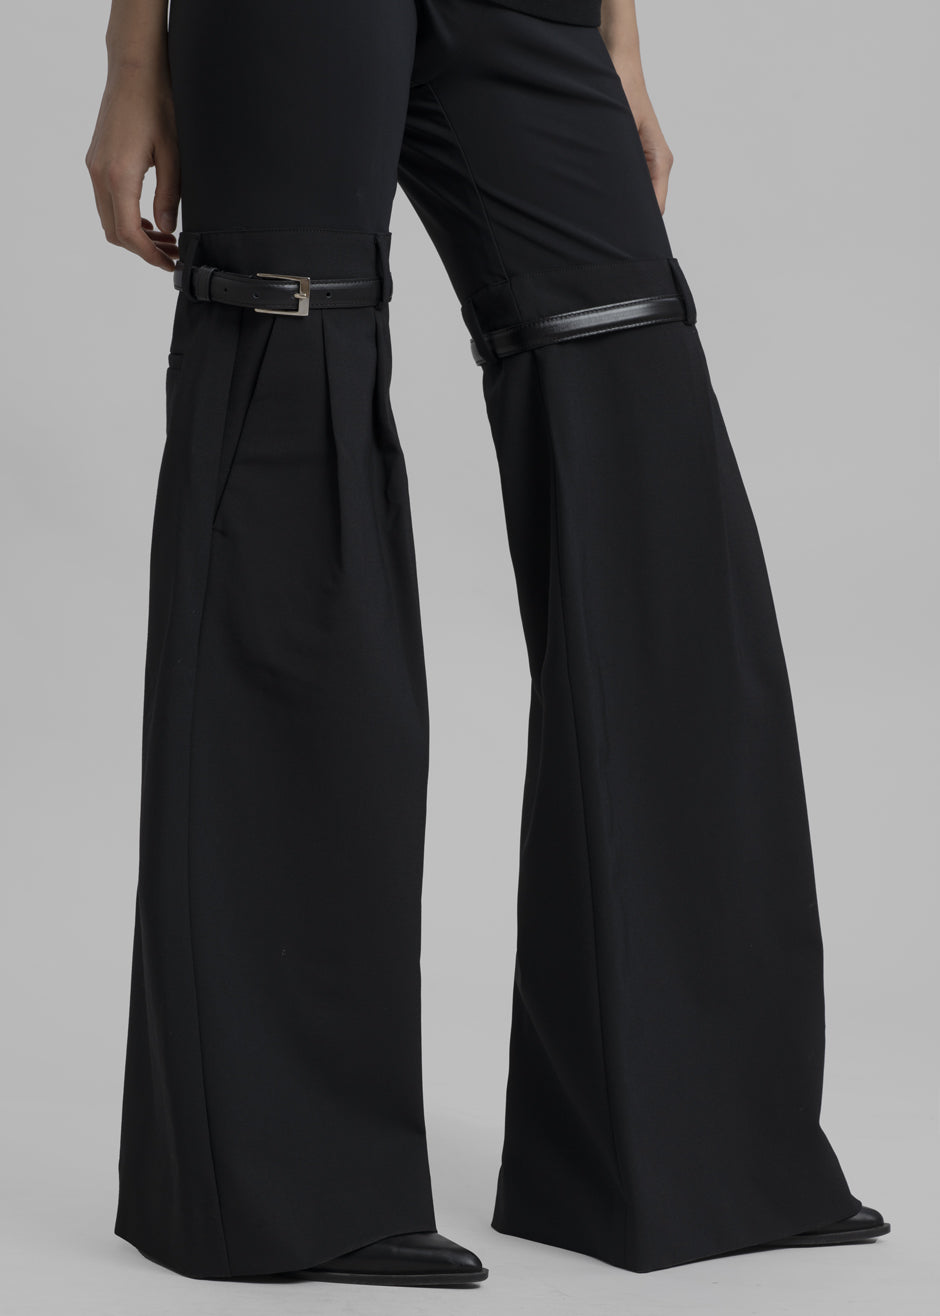 Pernille Faux Leather Pants - Black